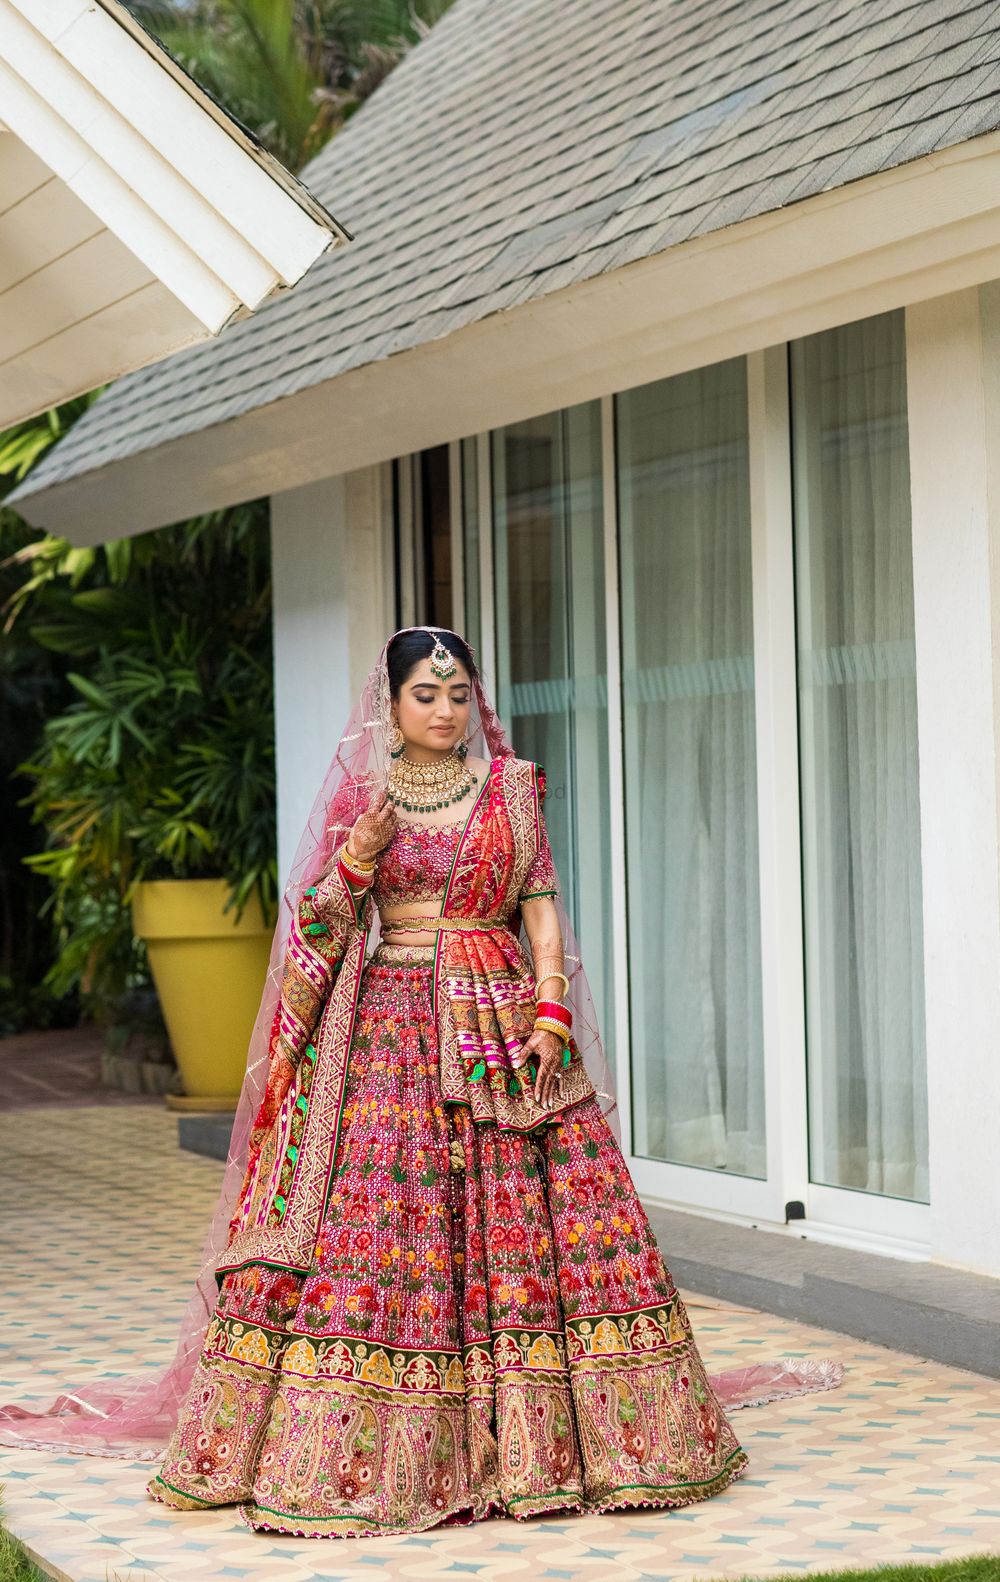 Photo of Bride in a multi-colored wedding lehenga